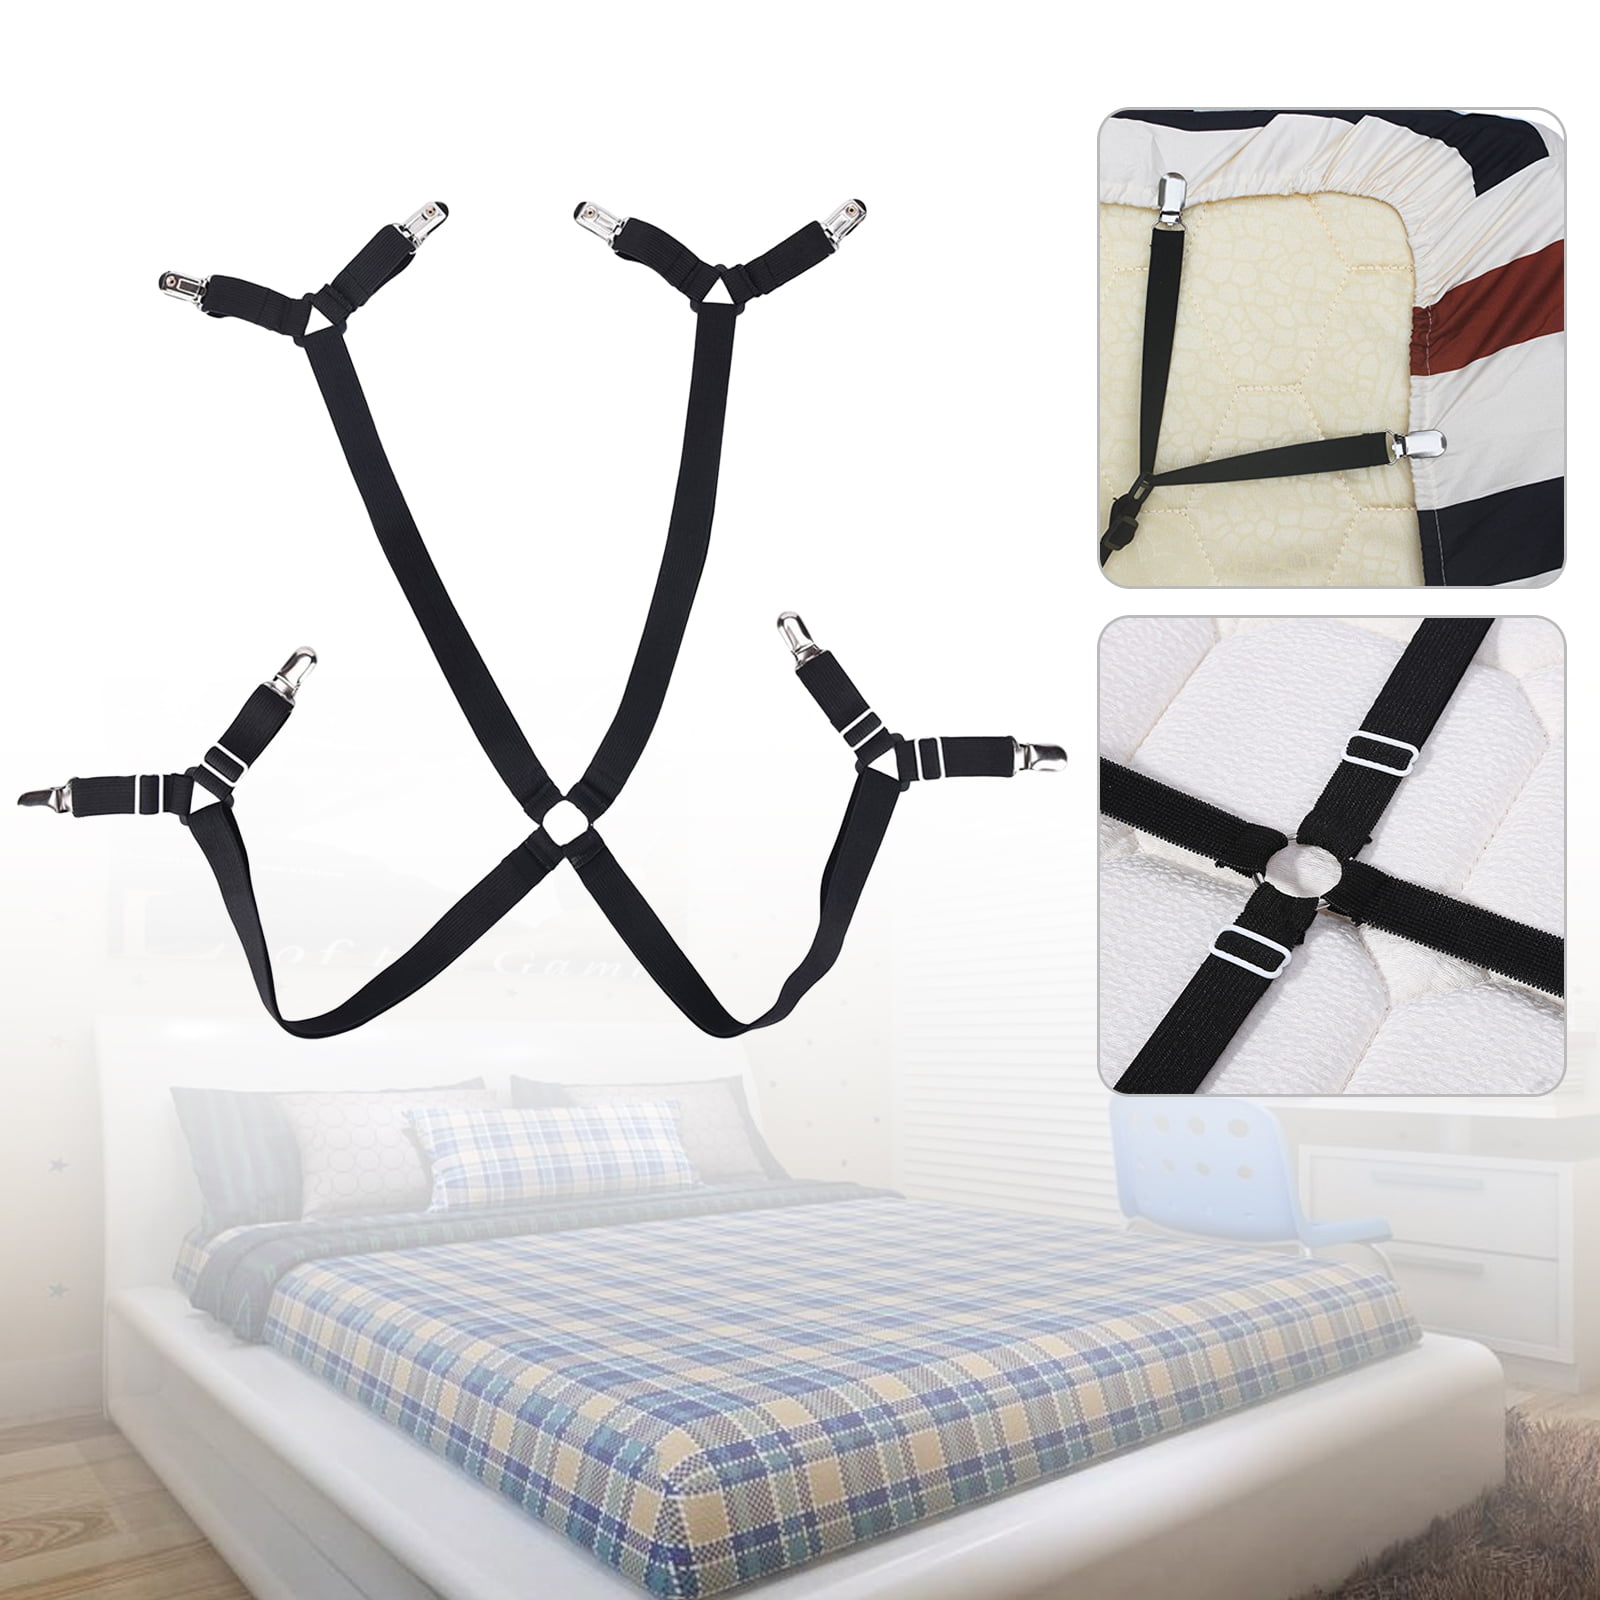 4x Adjustable Mattress Bed Sheet Clips Grippers Straps Suspender Fastener Holder 